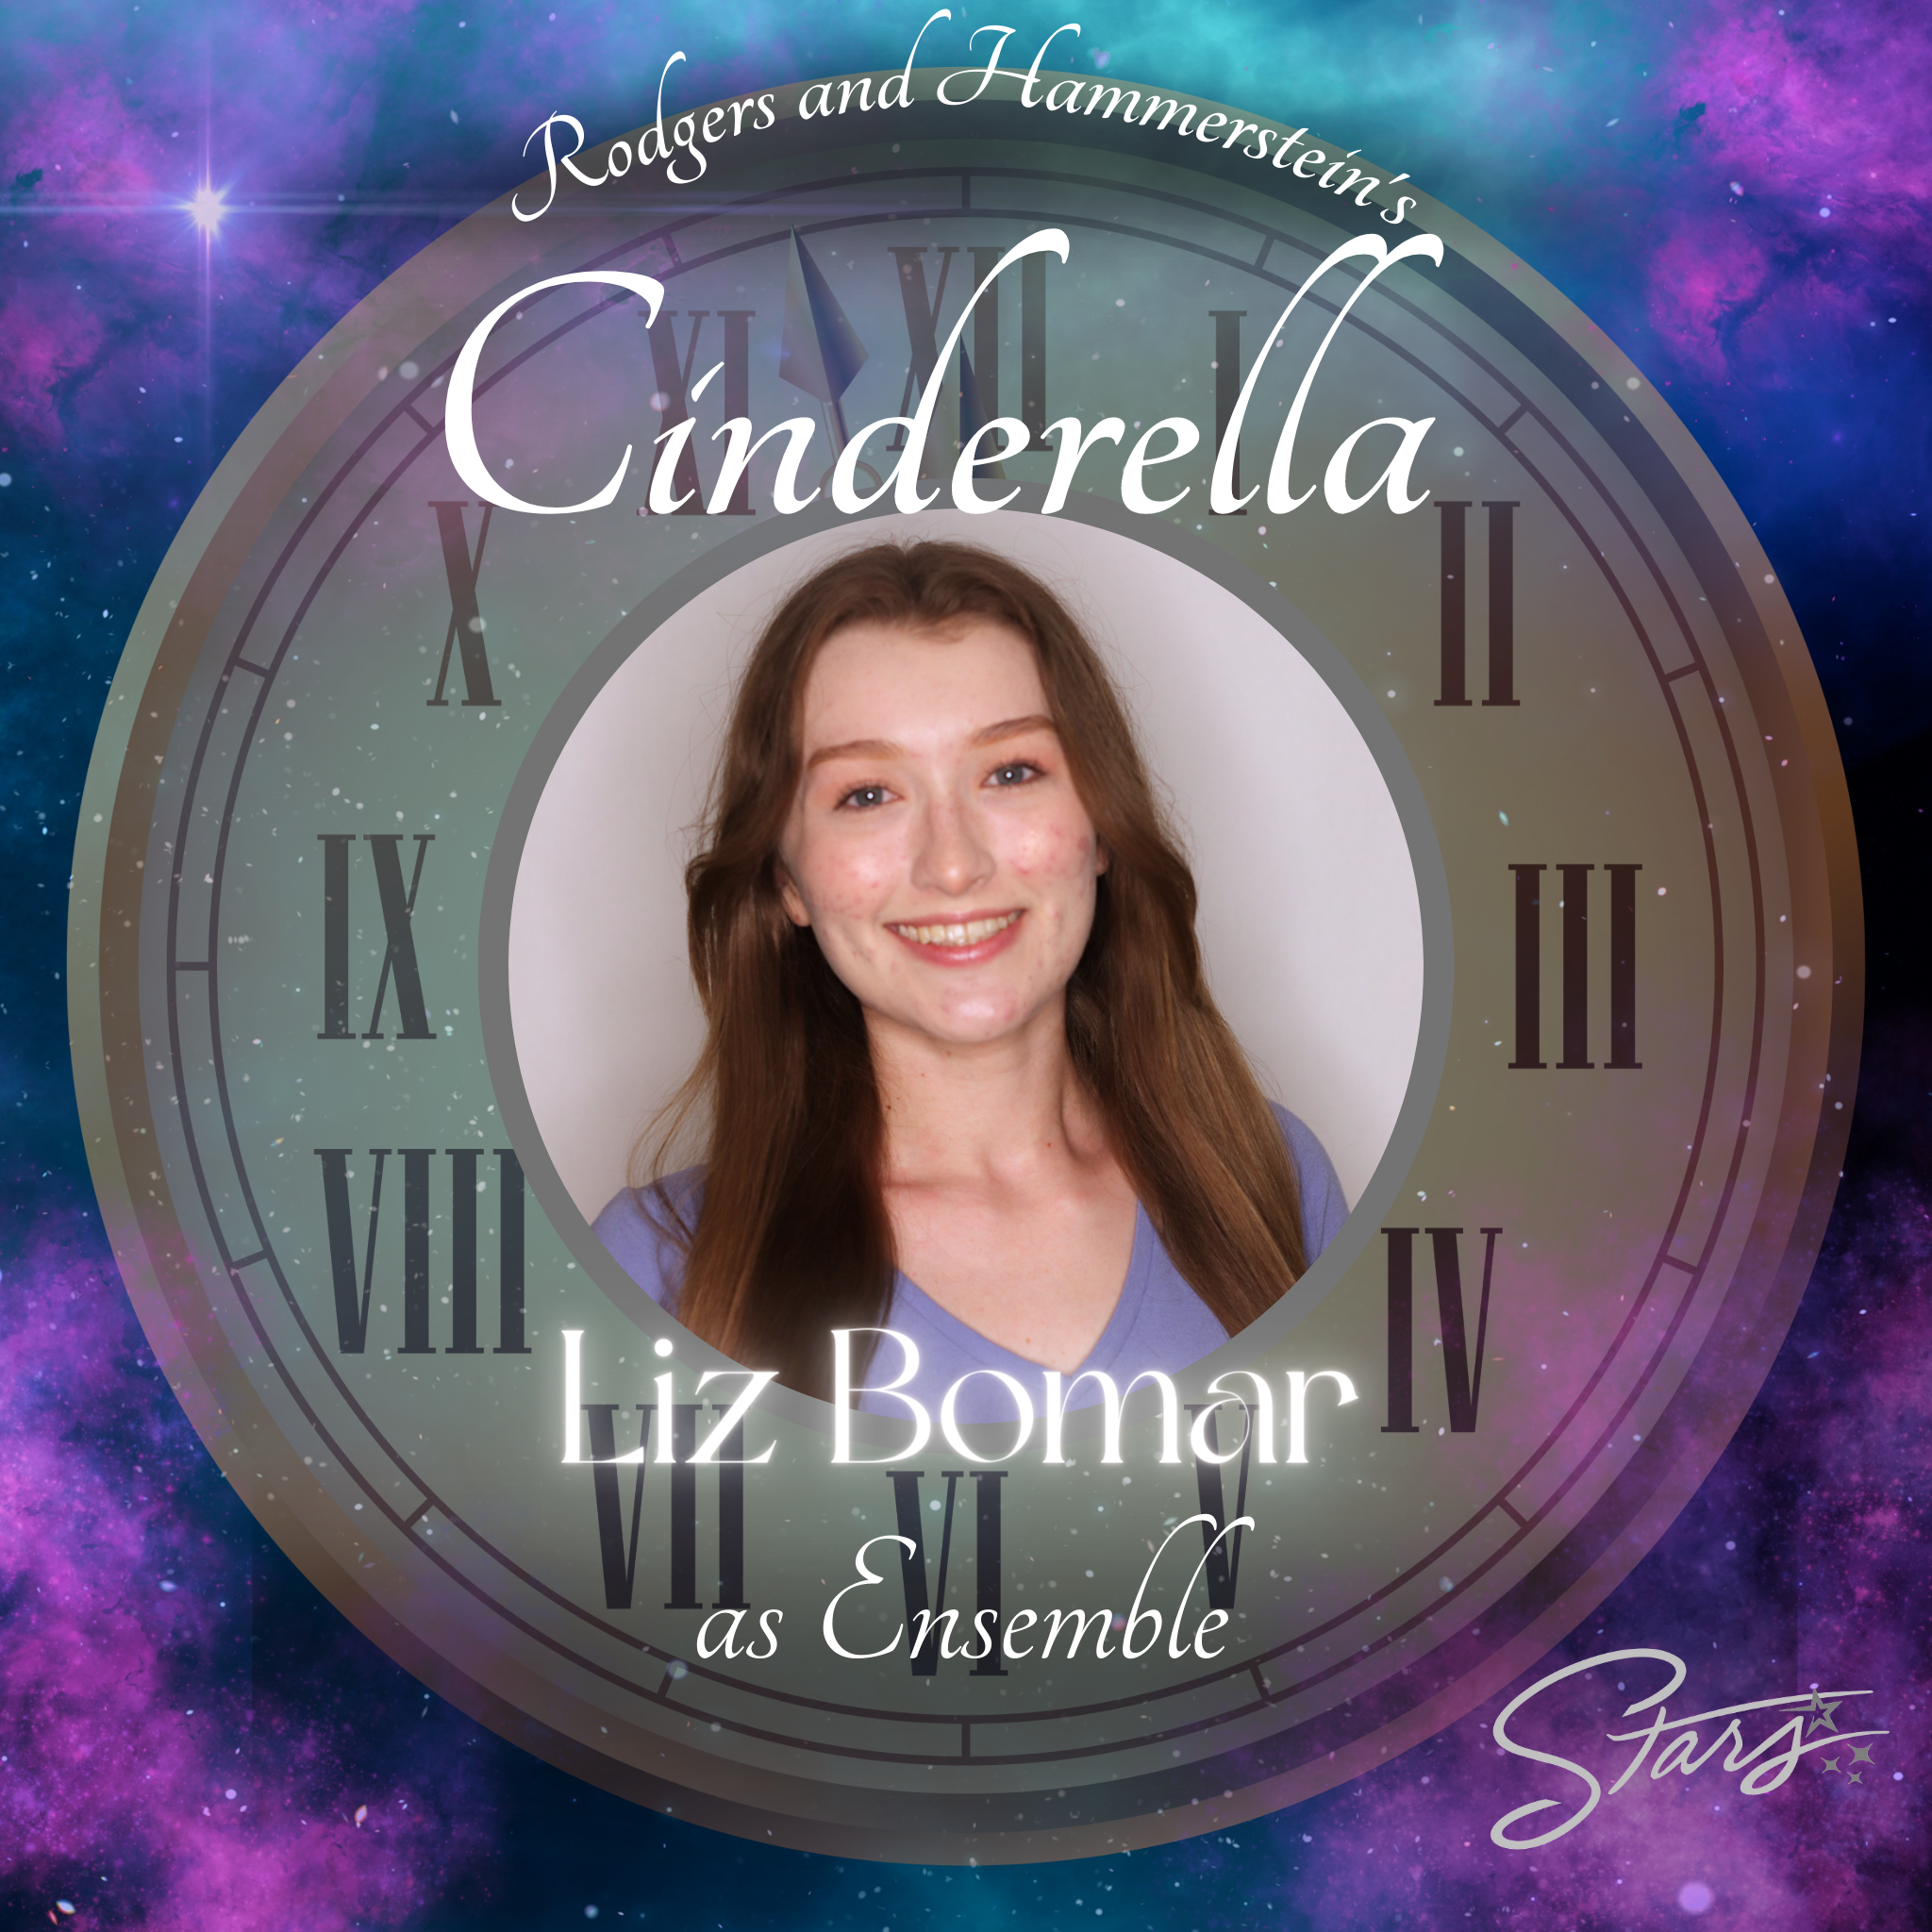 Liz Bomar as Ensemble in Cinderella